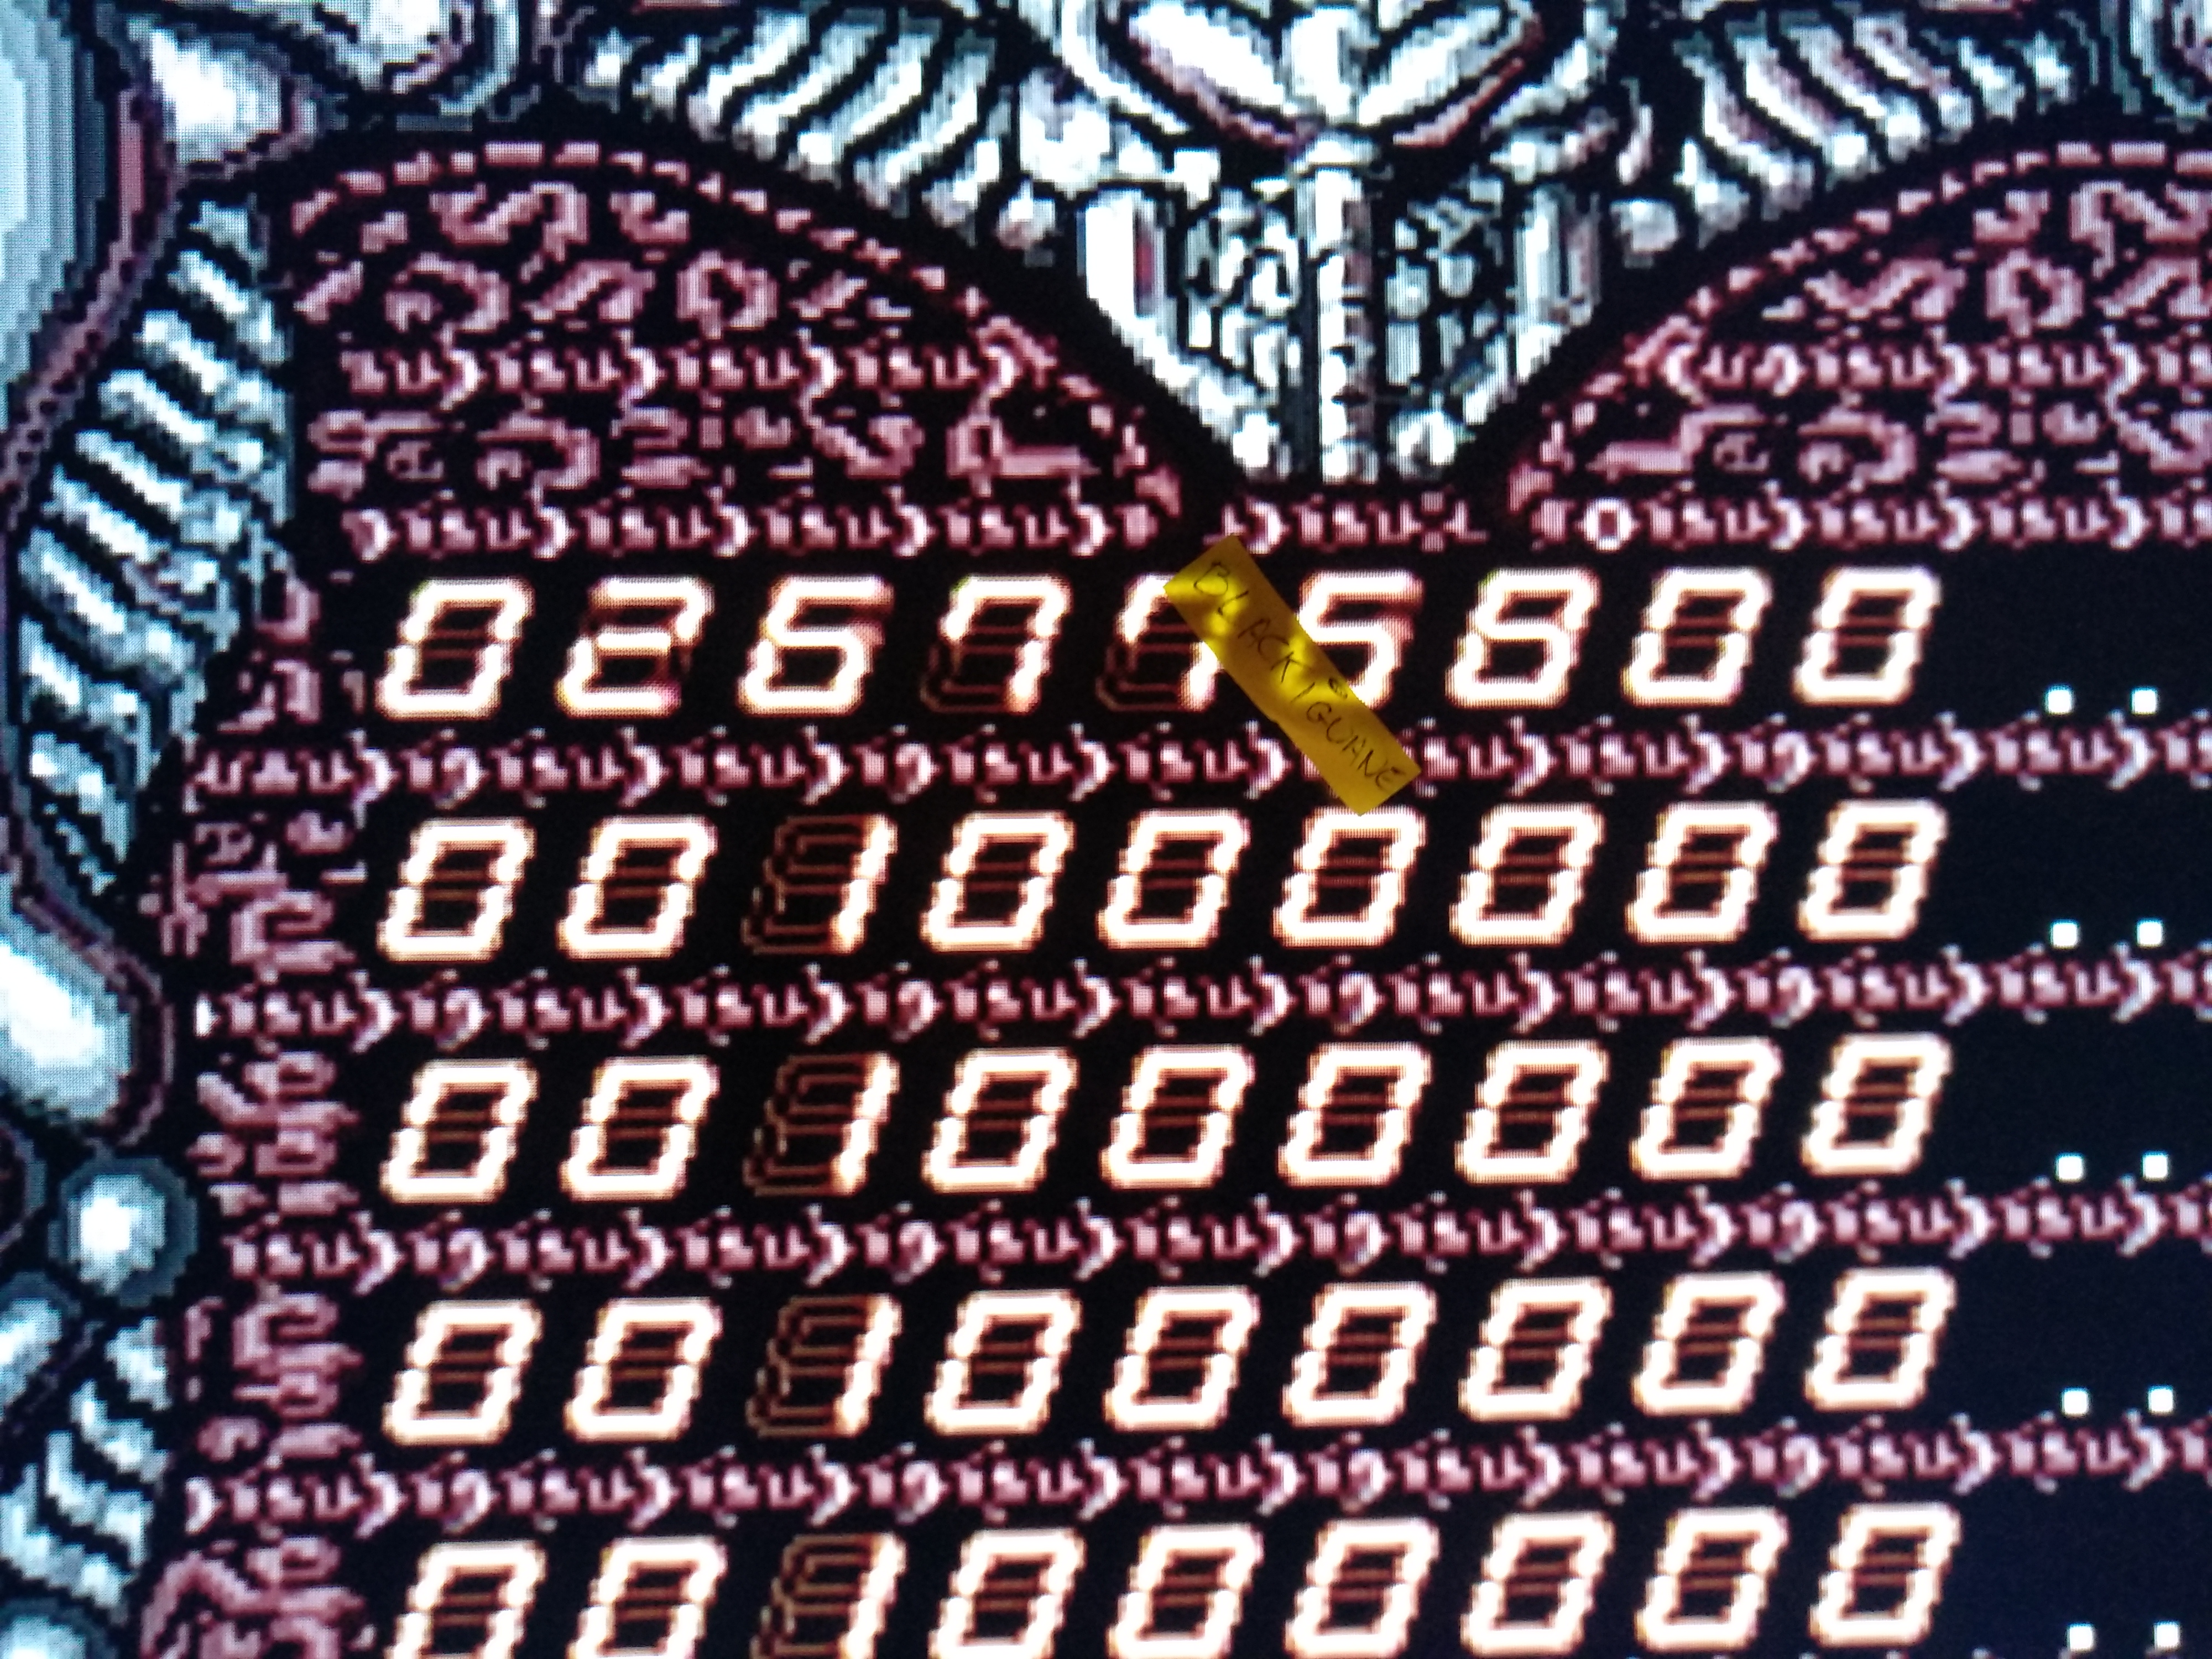 Blackiguane: Alien Crush (TurboGrafx-16/PC Engine) 26,776,800 points on 2019-04-07 11:10:37